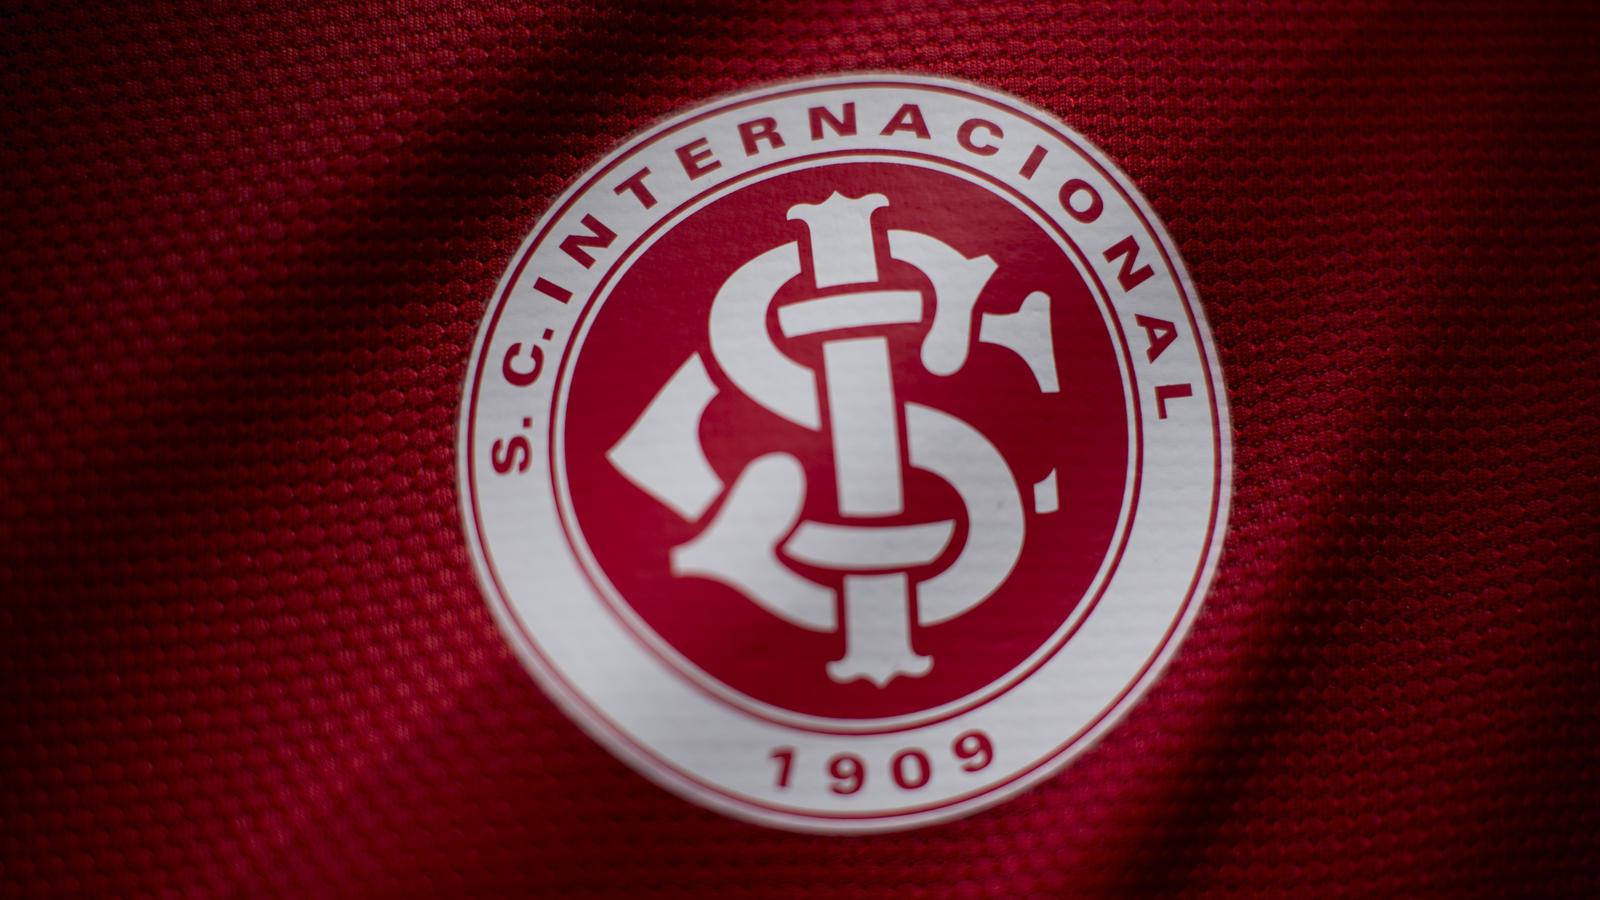 S.C. Internacional celebrate 104th birthday with new home kit design